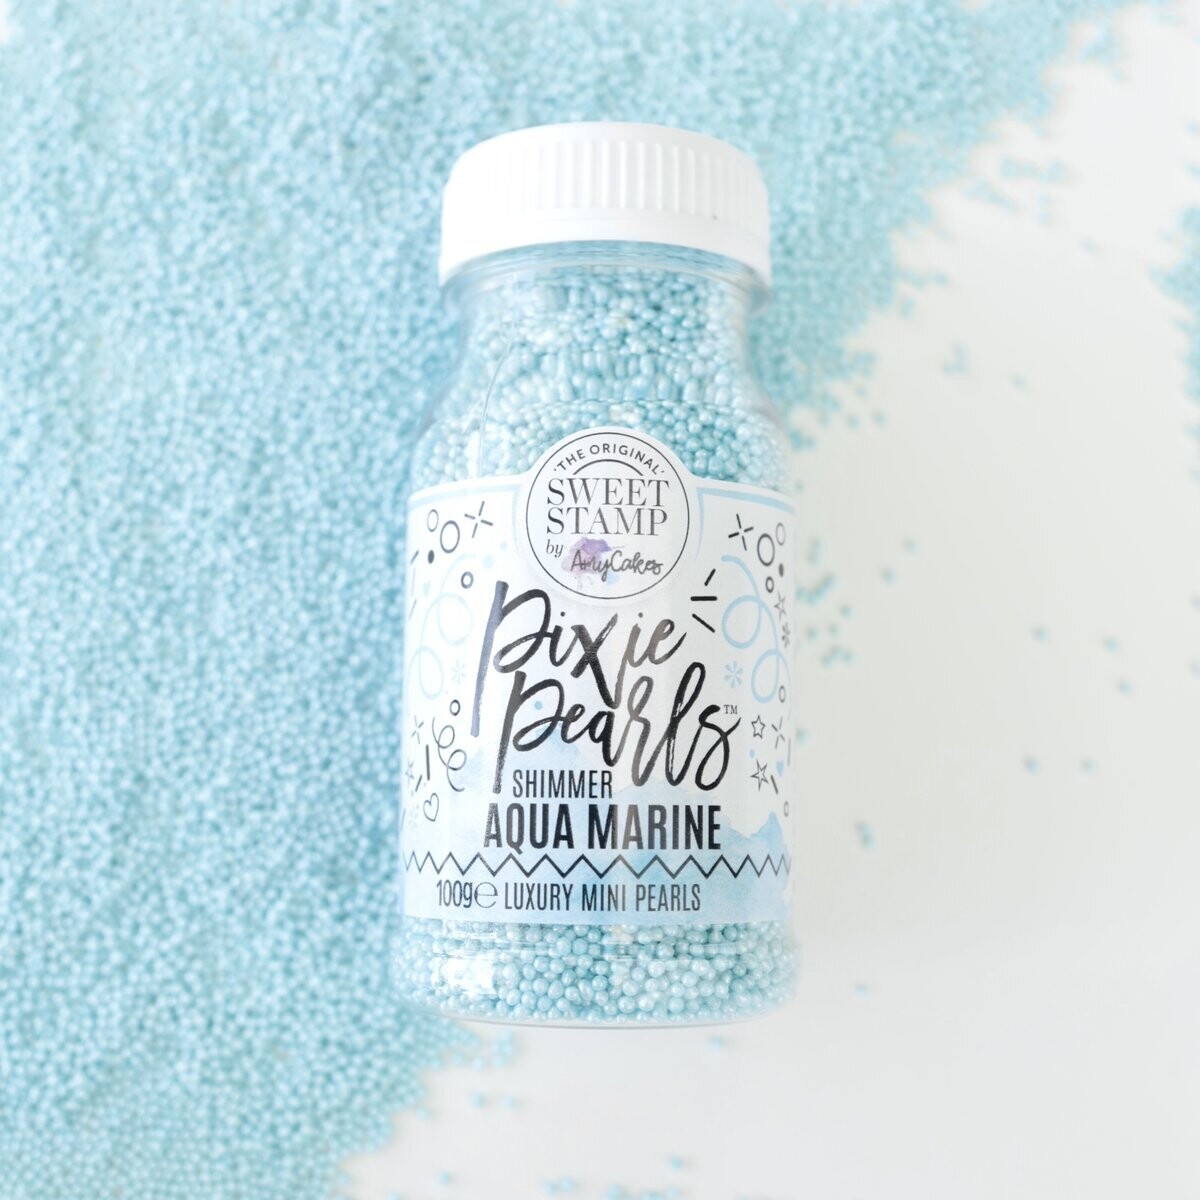 Sweet Stamp Pixie Pearls - Nonpareils -AQUAMARINE 100g - Κας-Κας Γαλάζιο